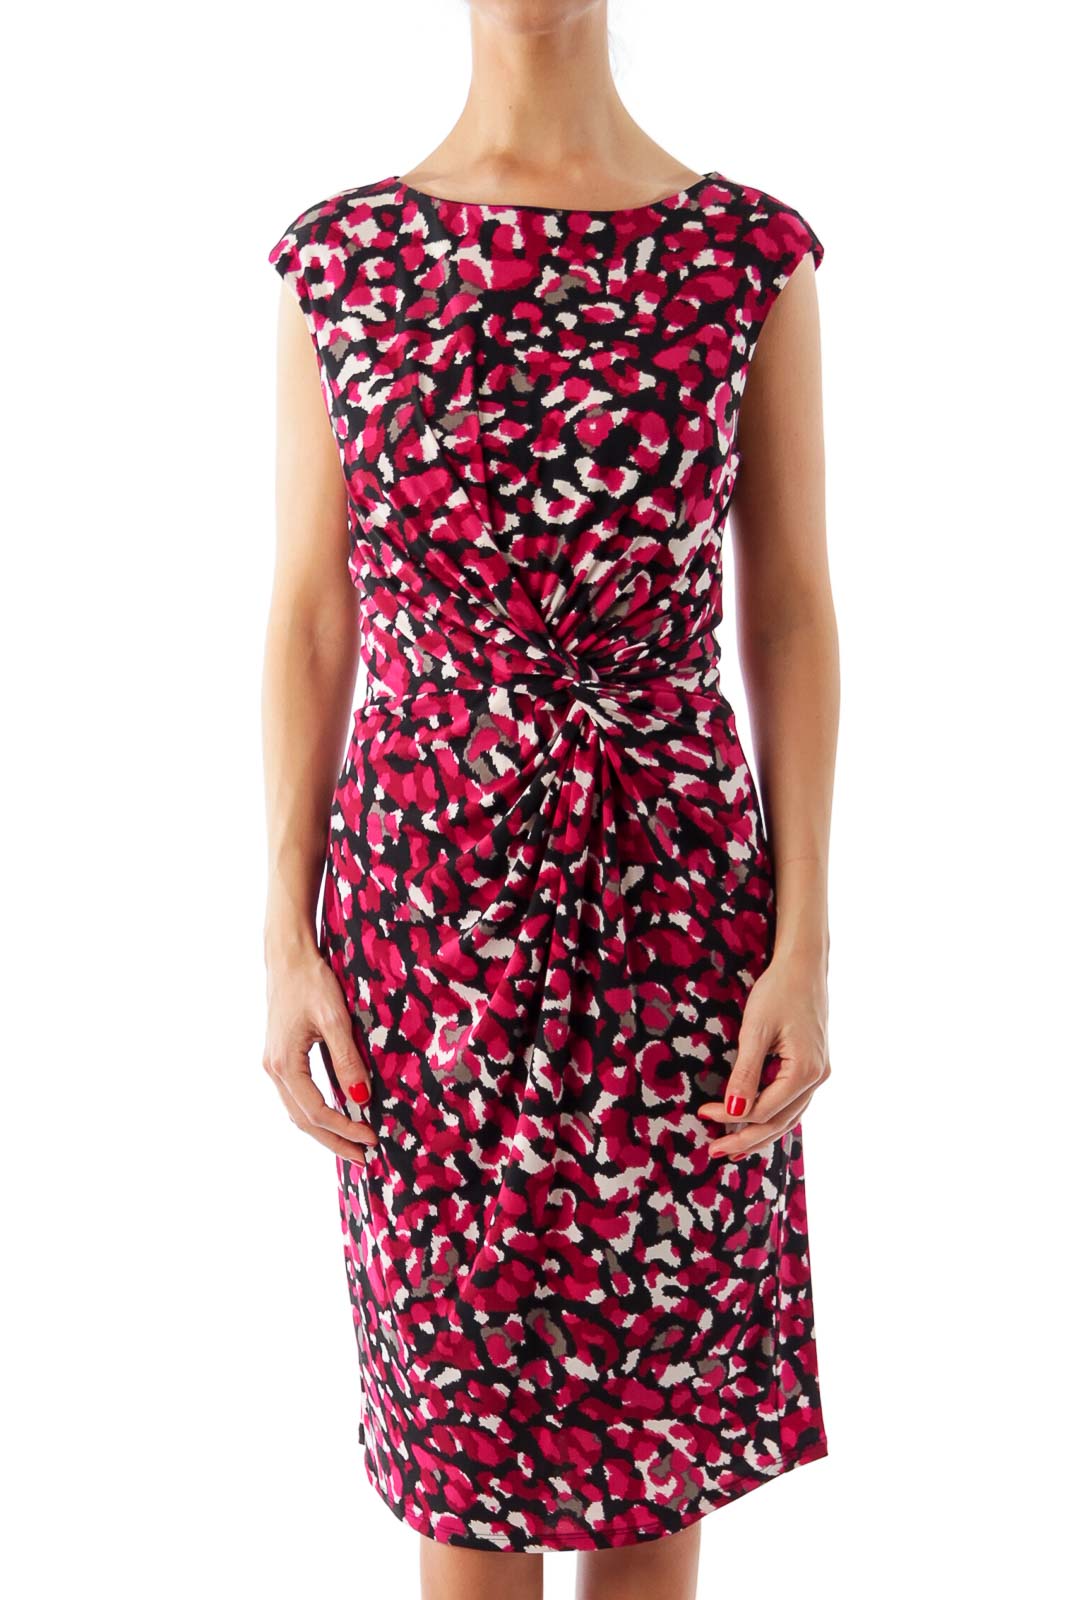 Black & Coral Pattern Print Scrunched Dress Front